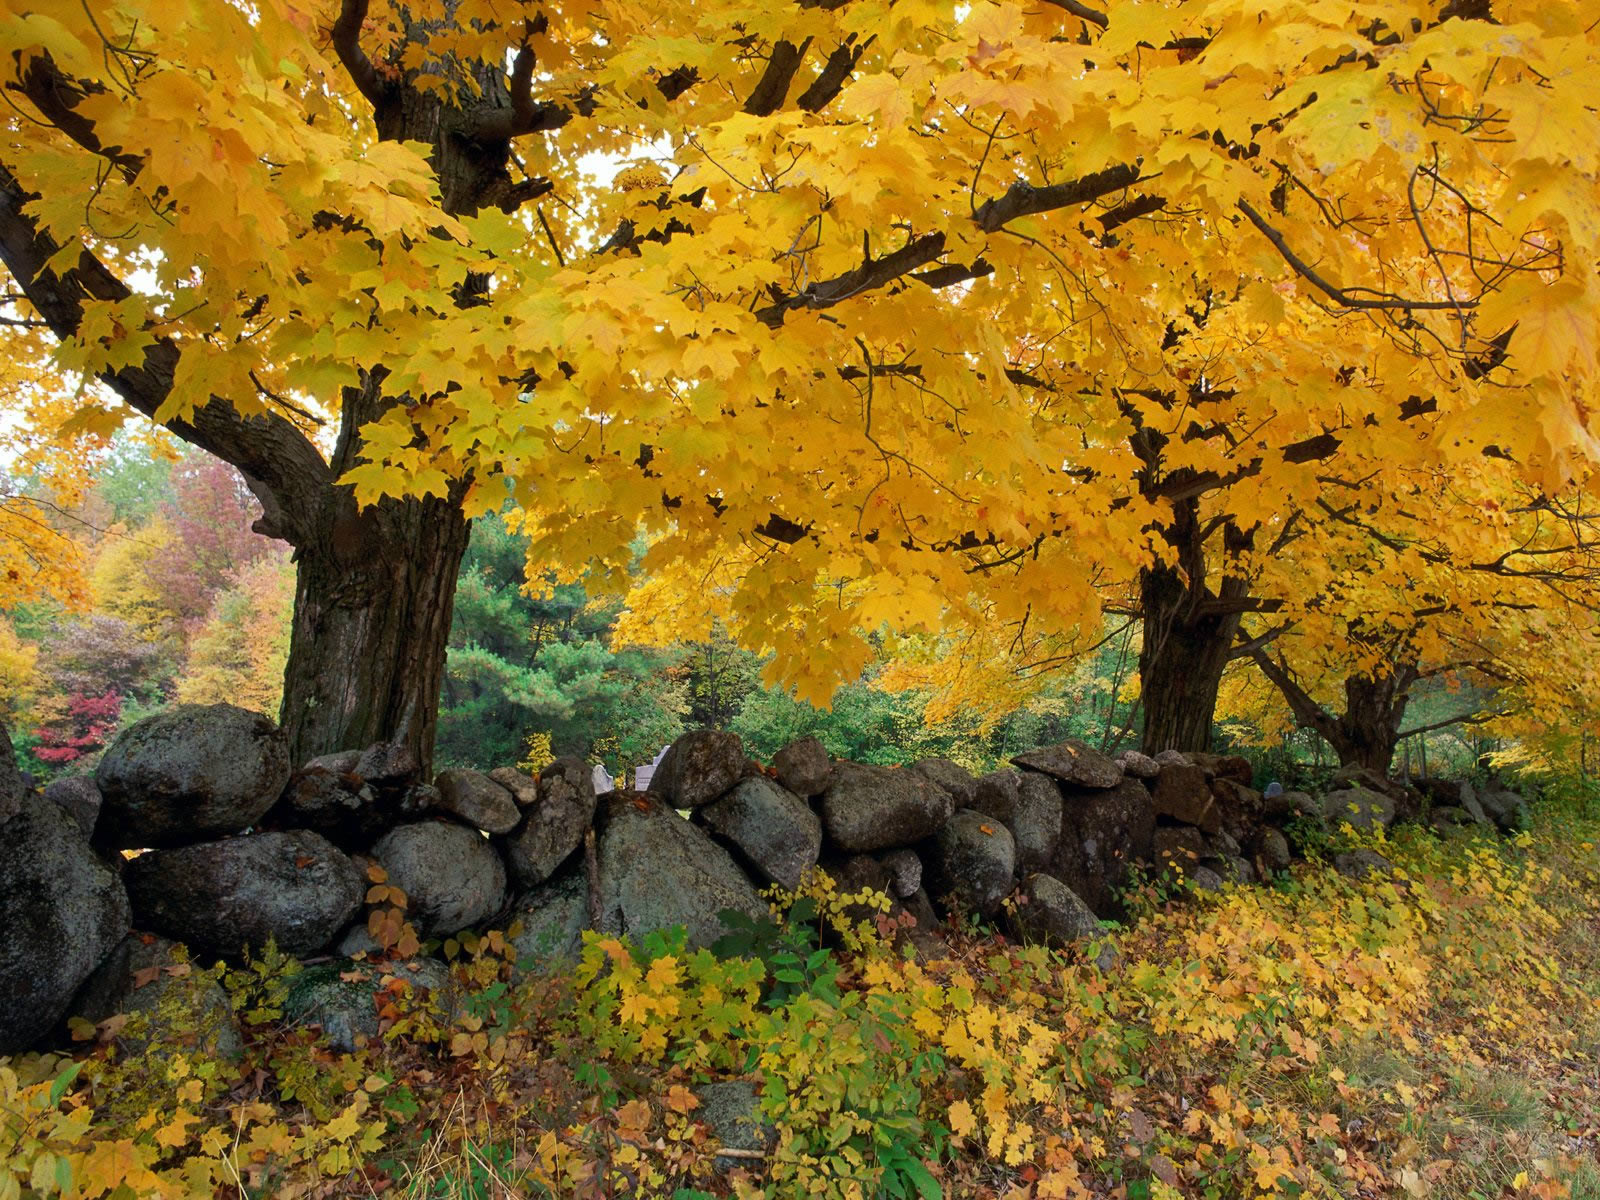  Golden Season In New England   Nature Wallpaper Image featuring Autumn